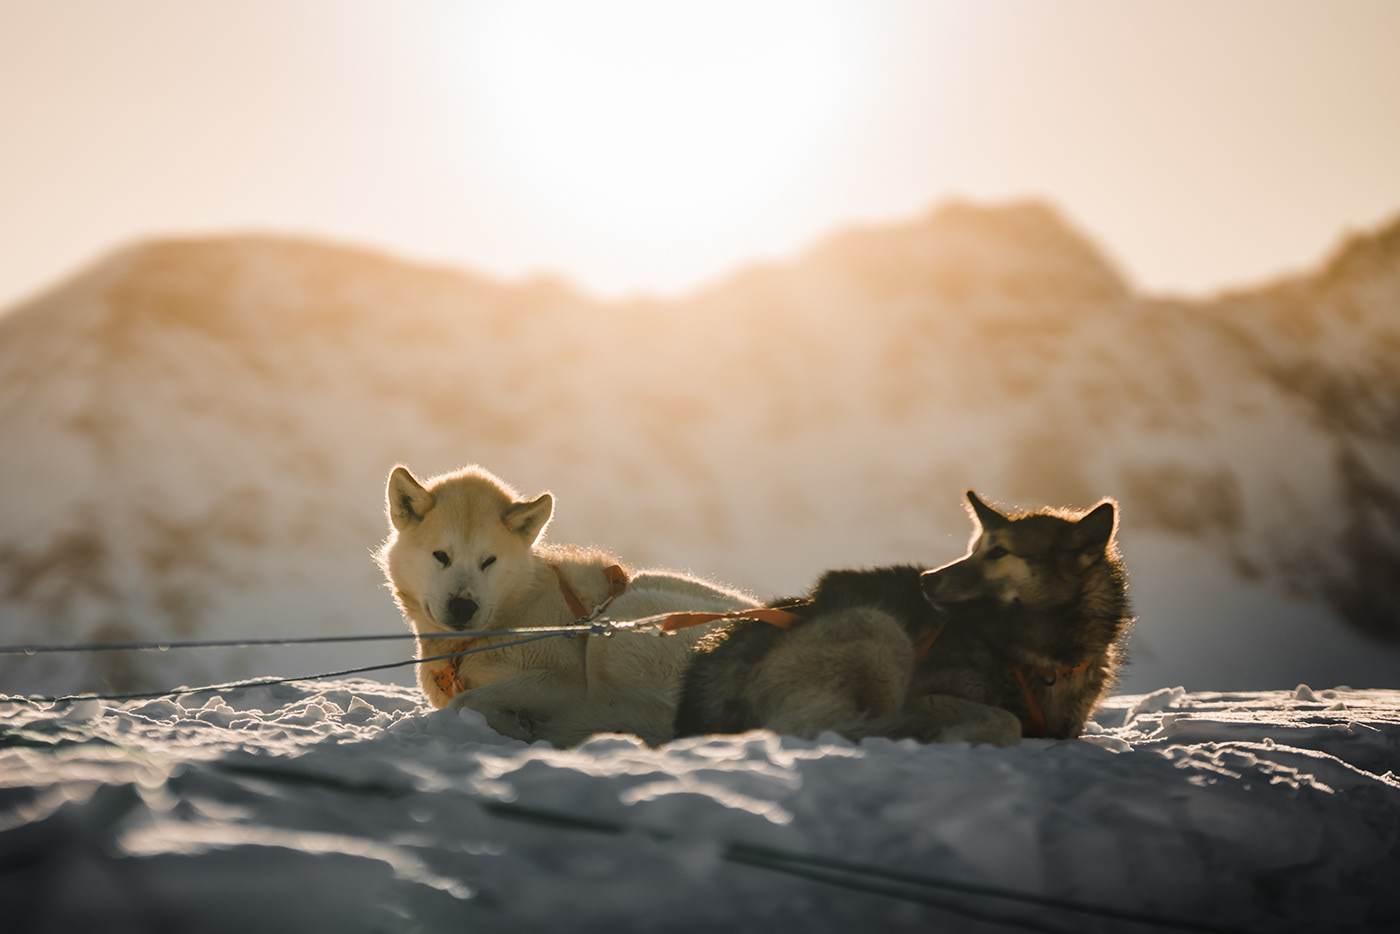 Greenland Arctic winter dogs snow remote ice White Nature Landscape